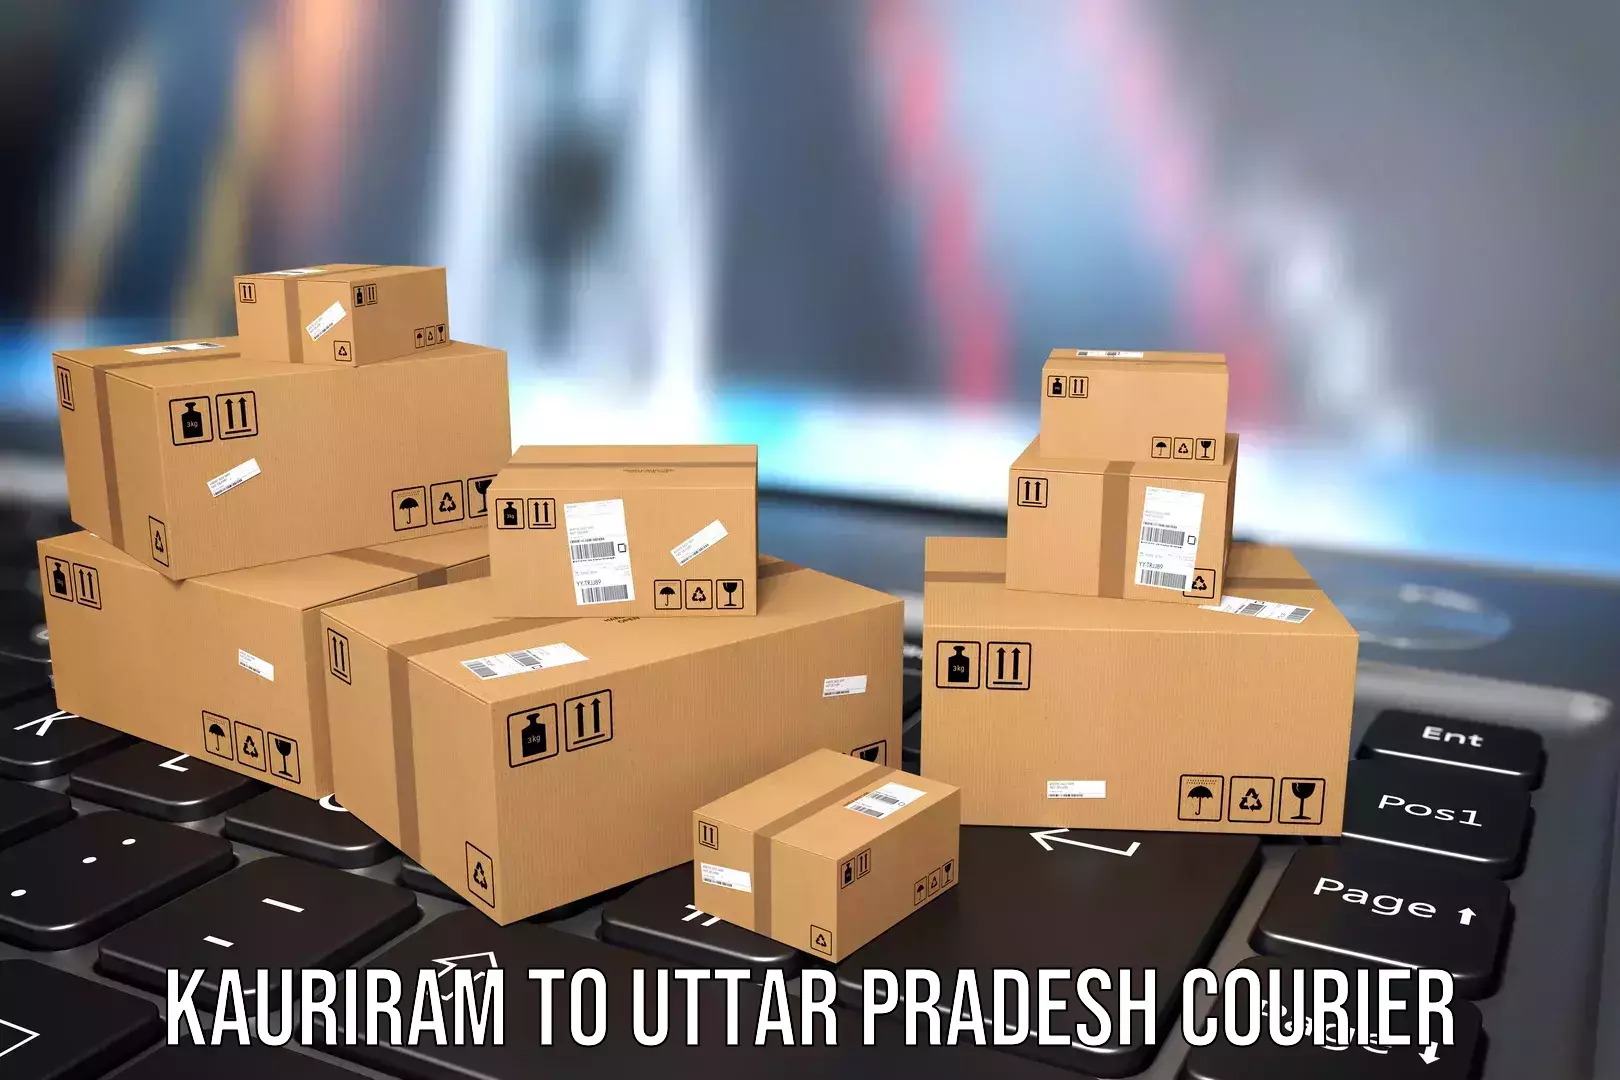 Luggage shipment processing Kauriram to Noida